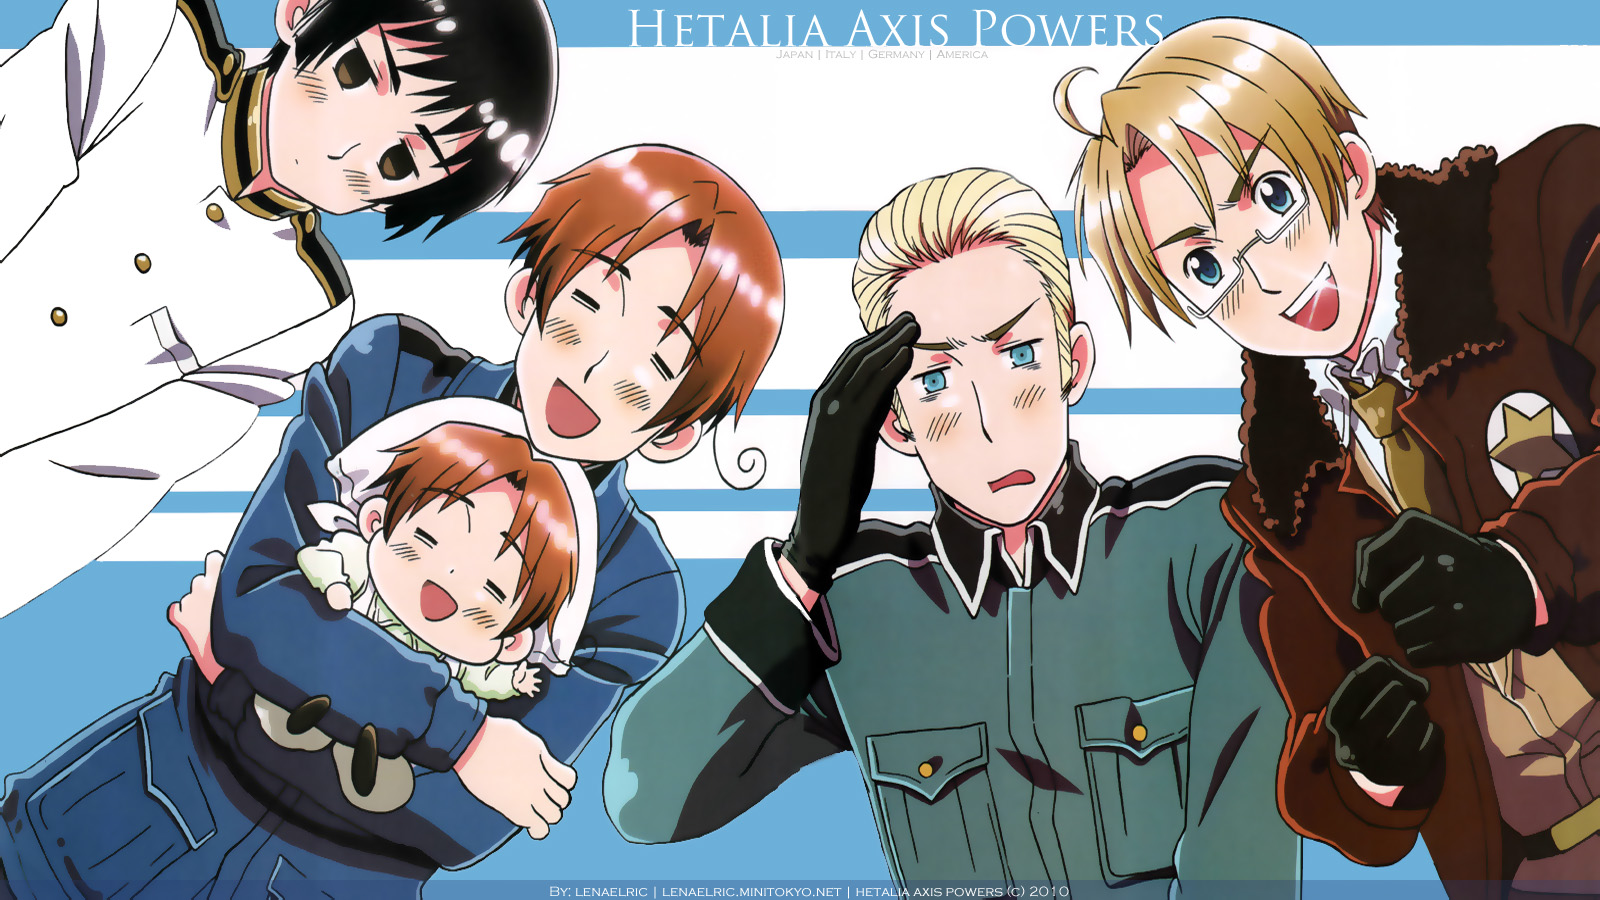 Hetalia: Axis Powers Wallpapers